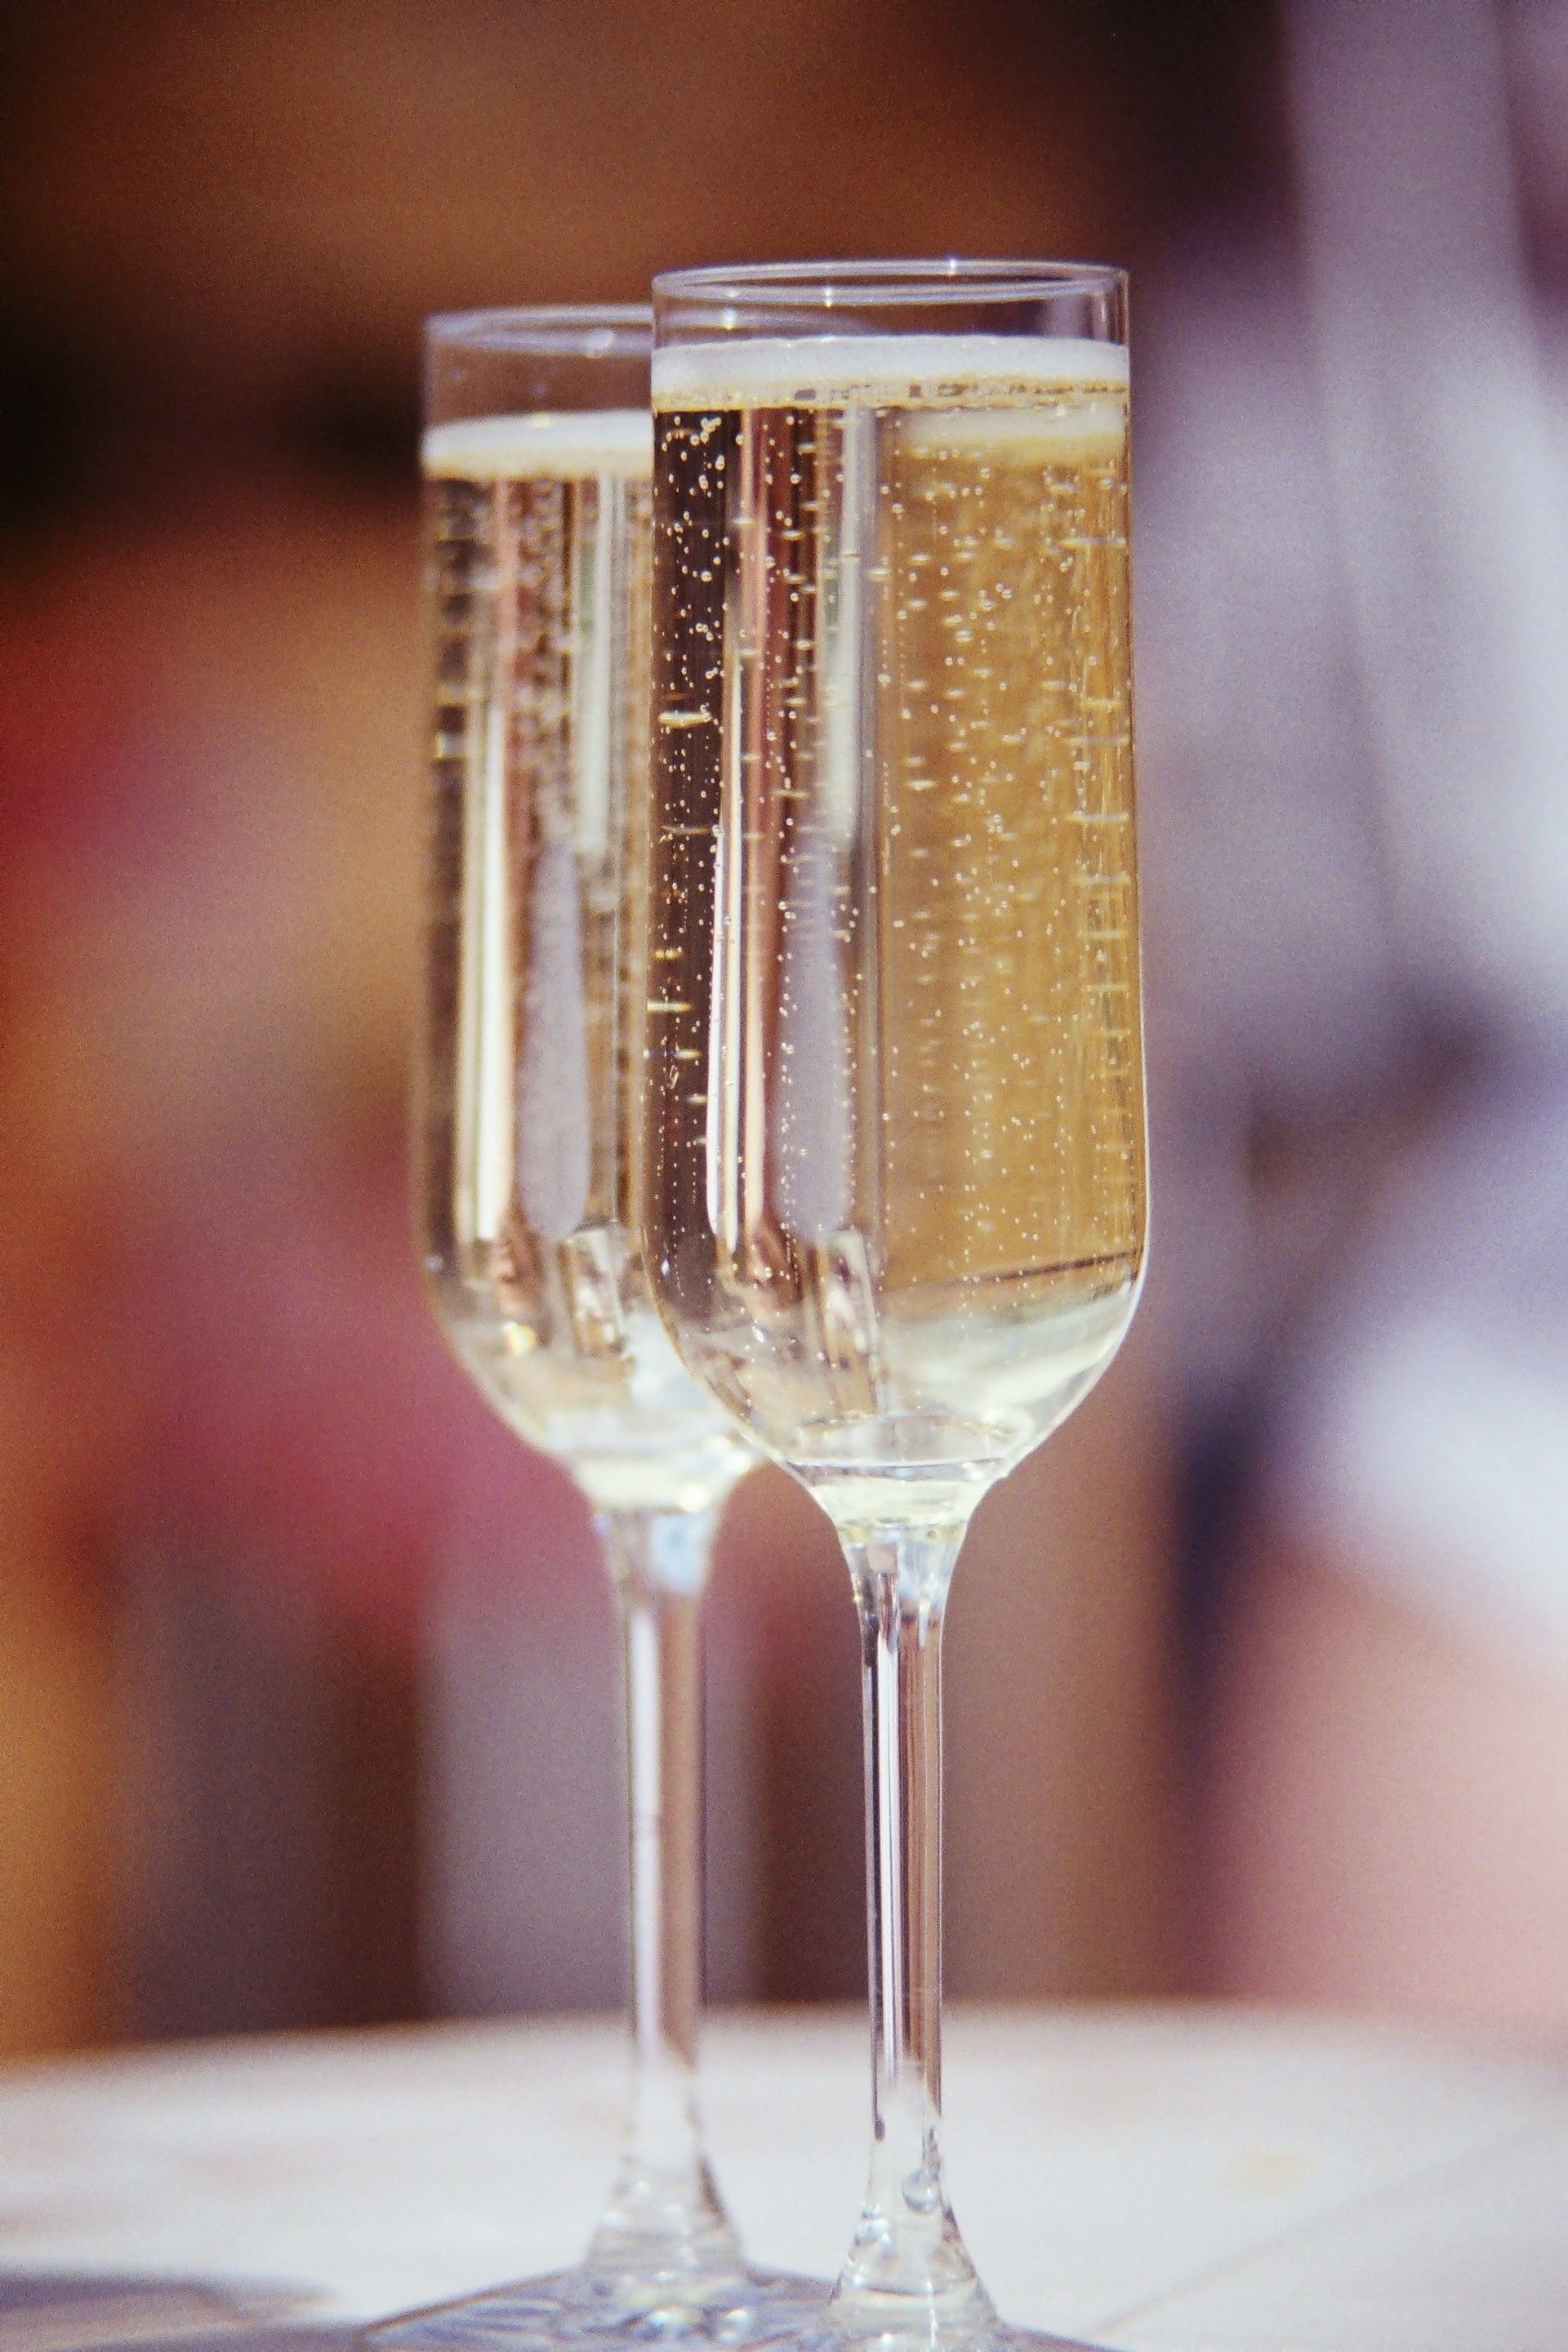 Dos copas de champán | Fuente: Unsplash